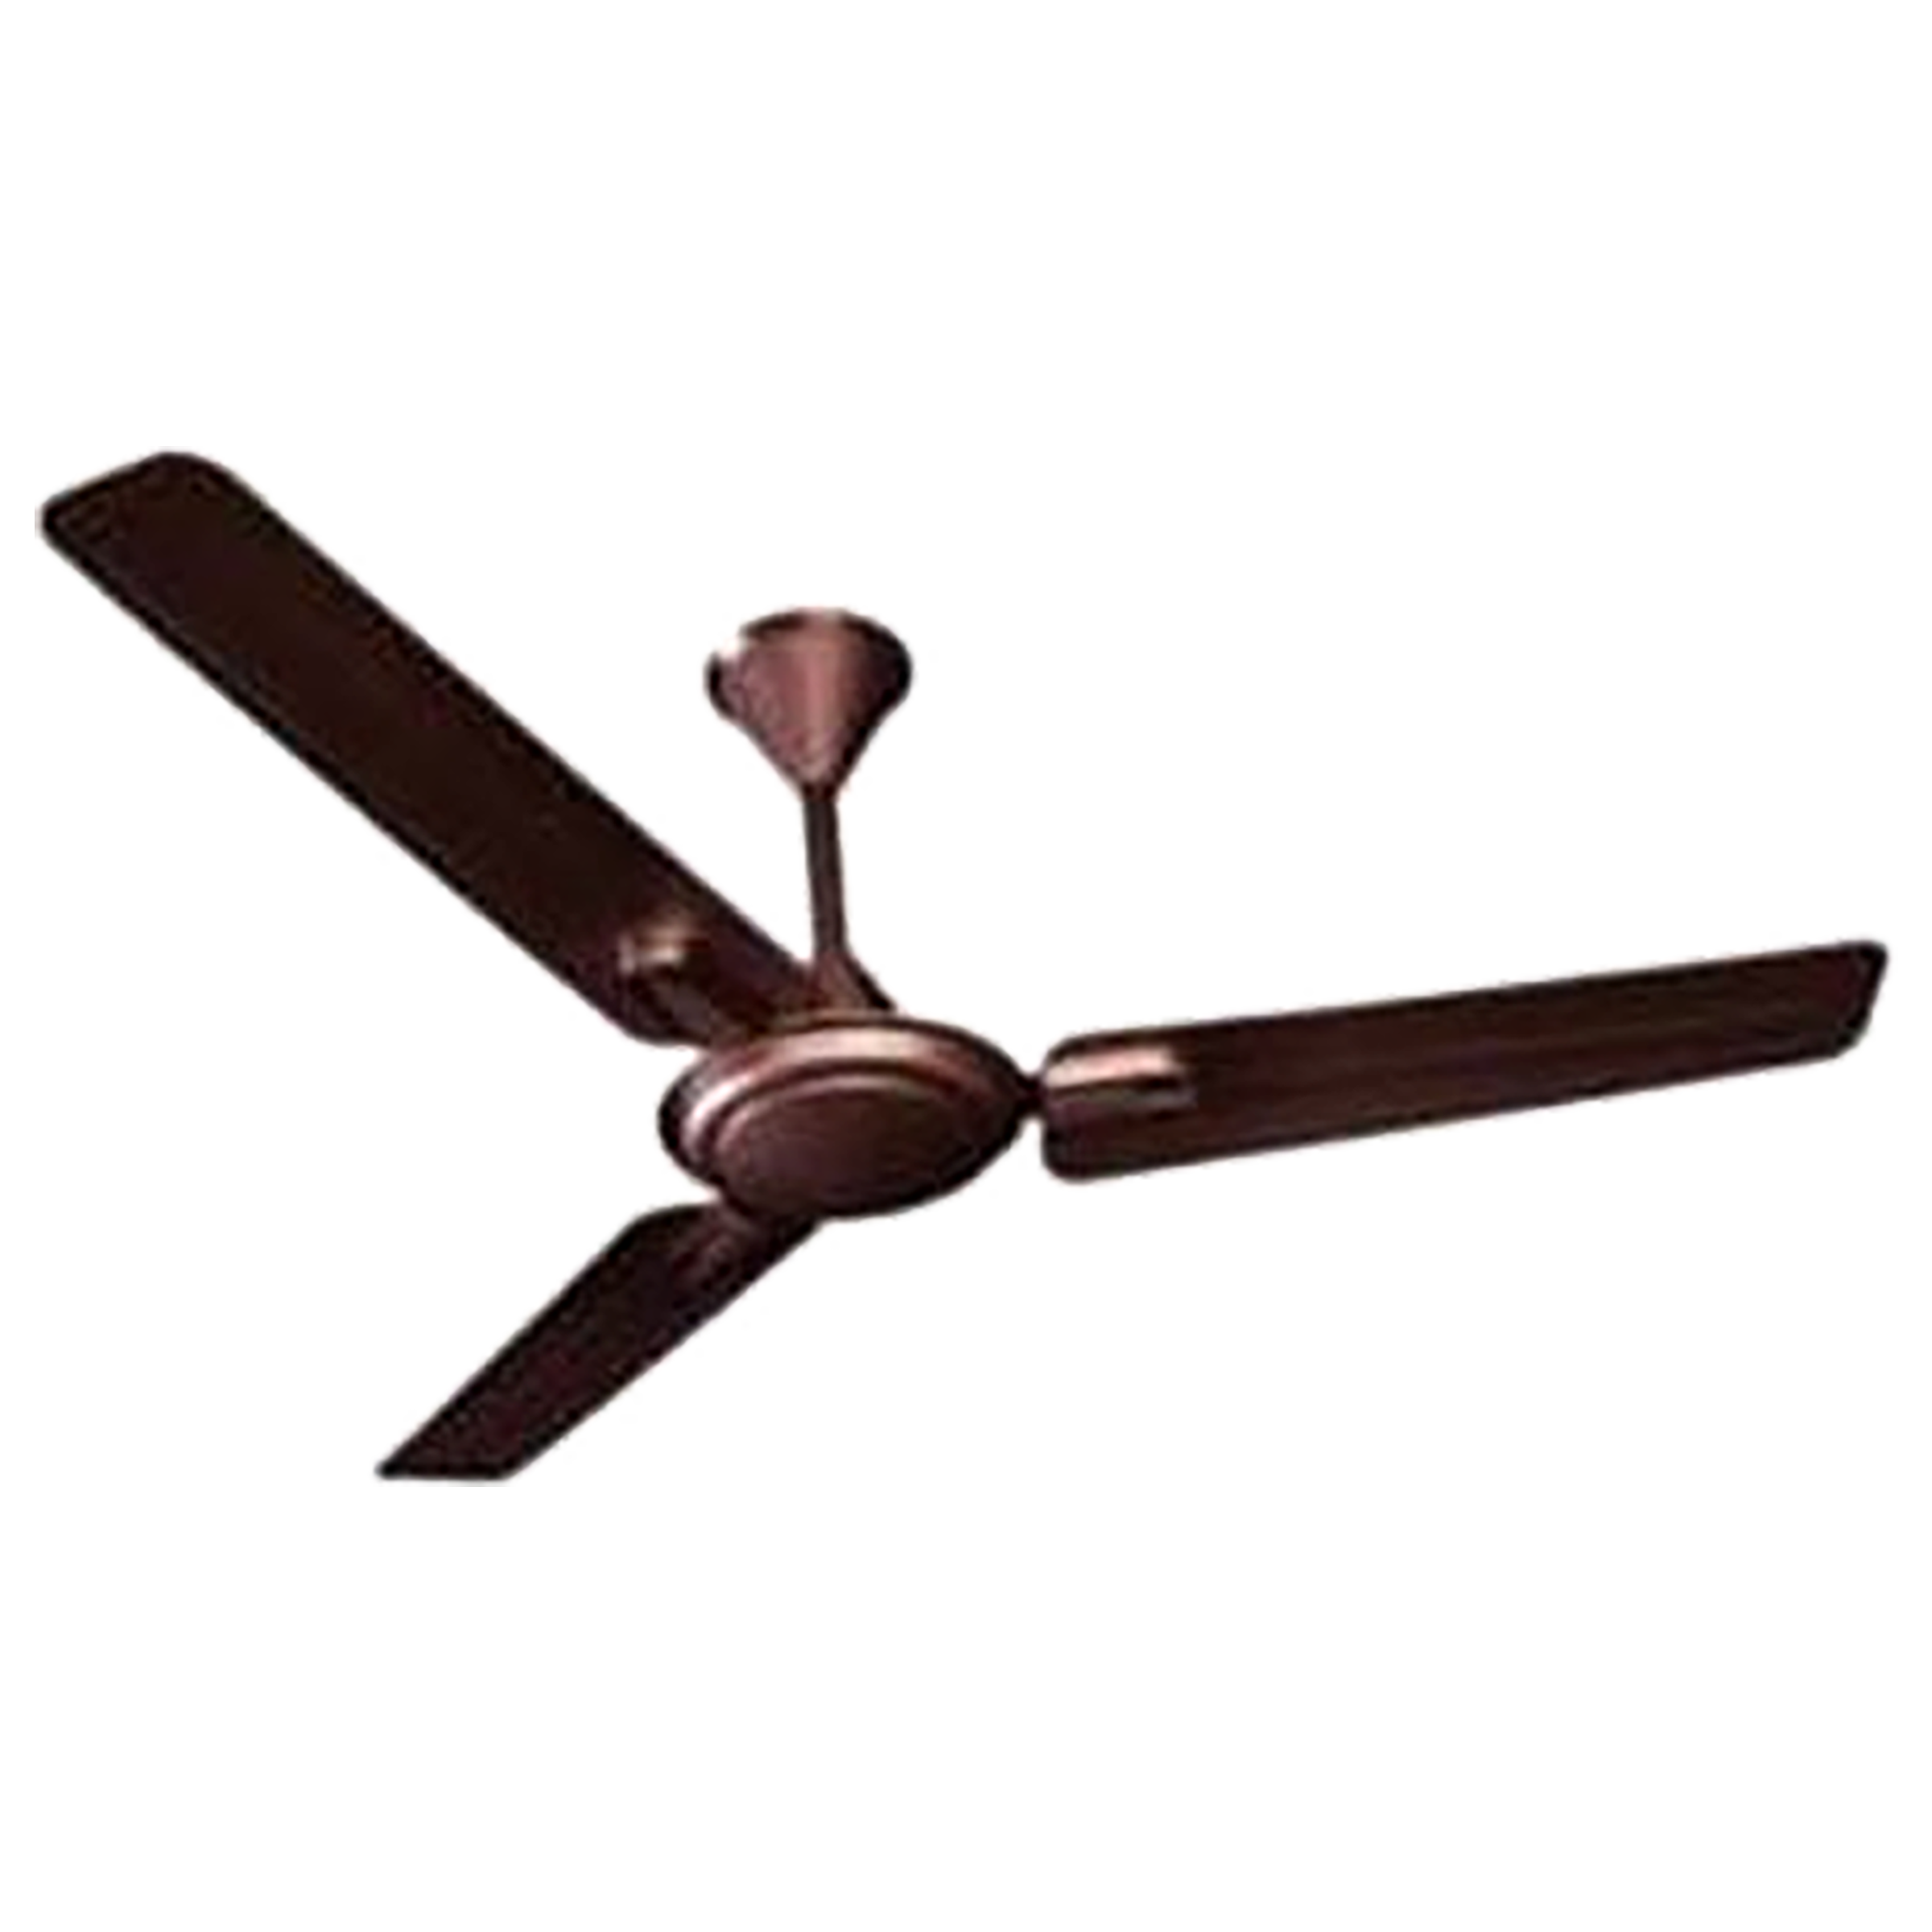 Crompton Ariyabriz Prime 120 cm Sweep 3 Blade Ceiling Fan (Ornamental Design, ARYBRZPRIME48MKBN, Mink Brown)_1